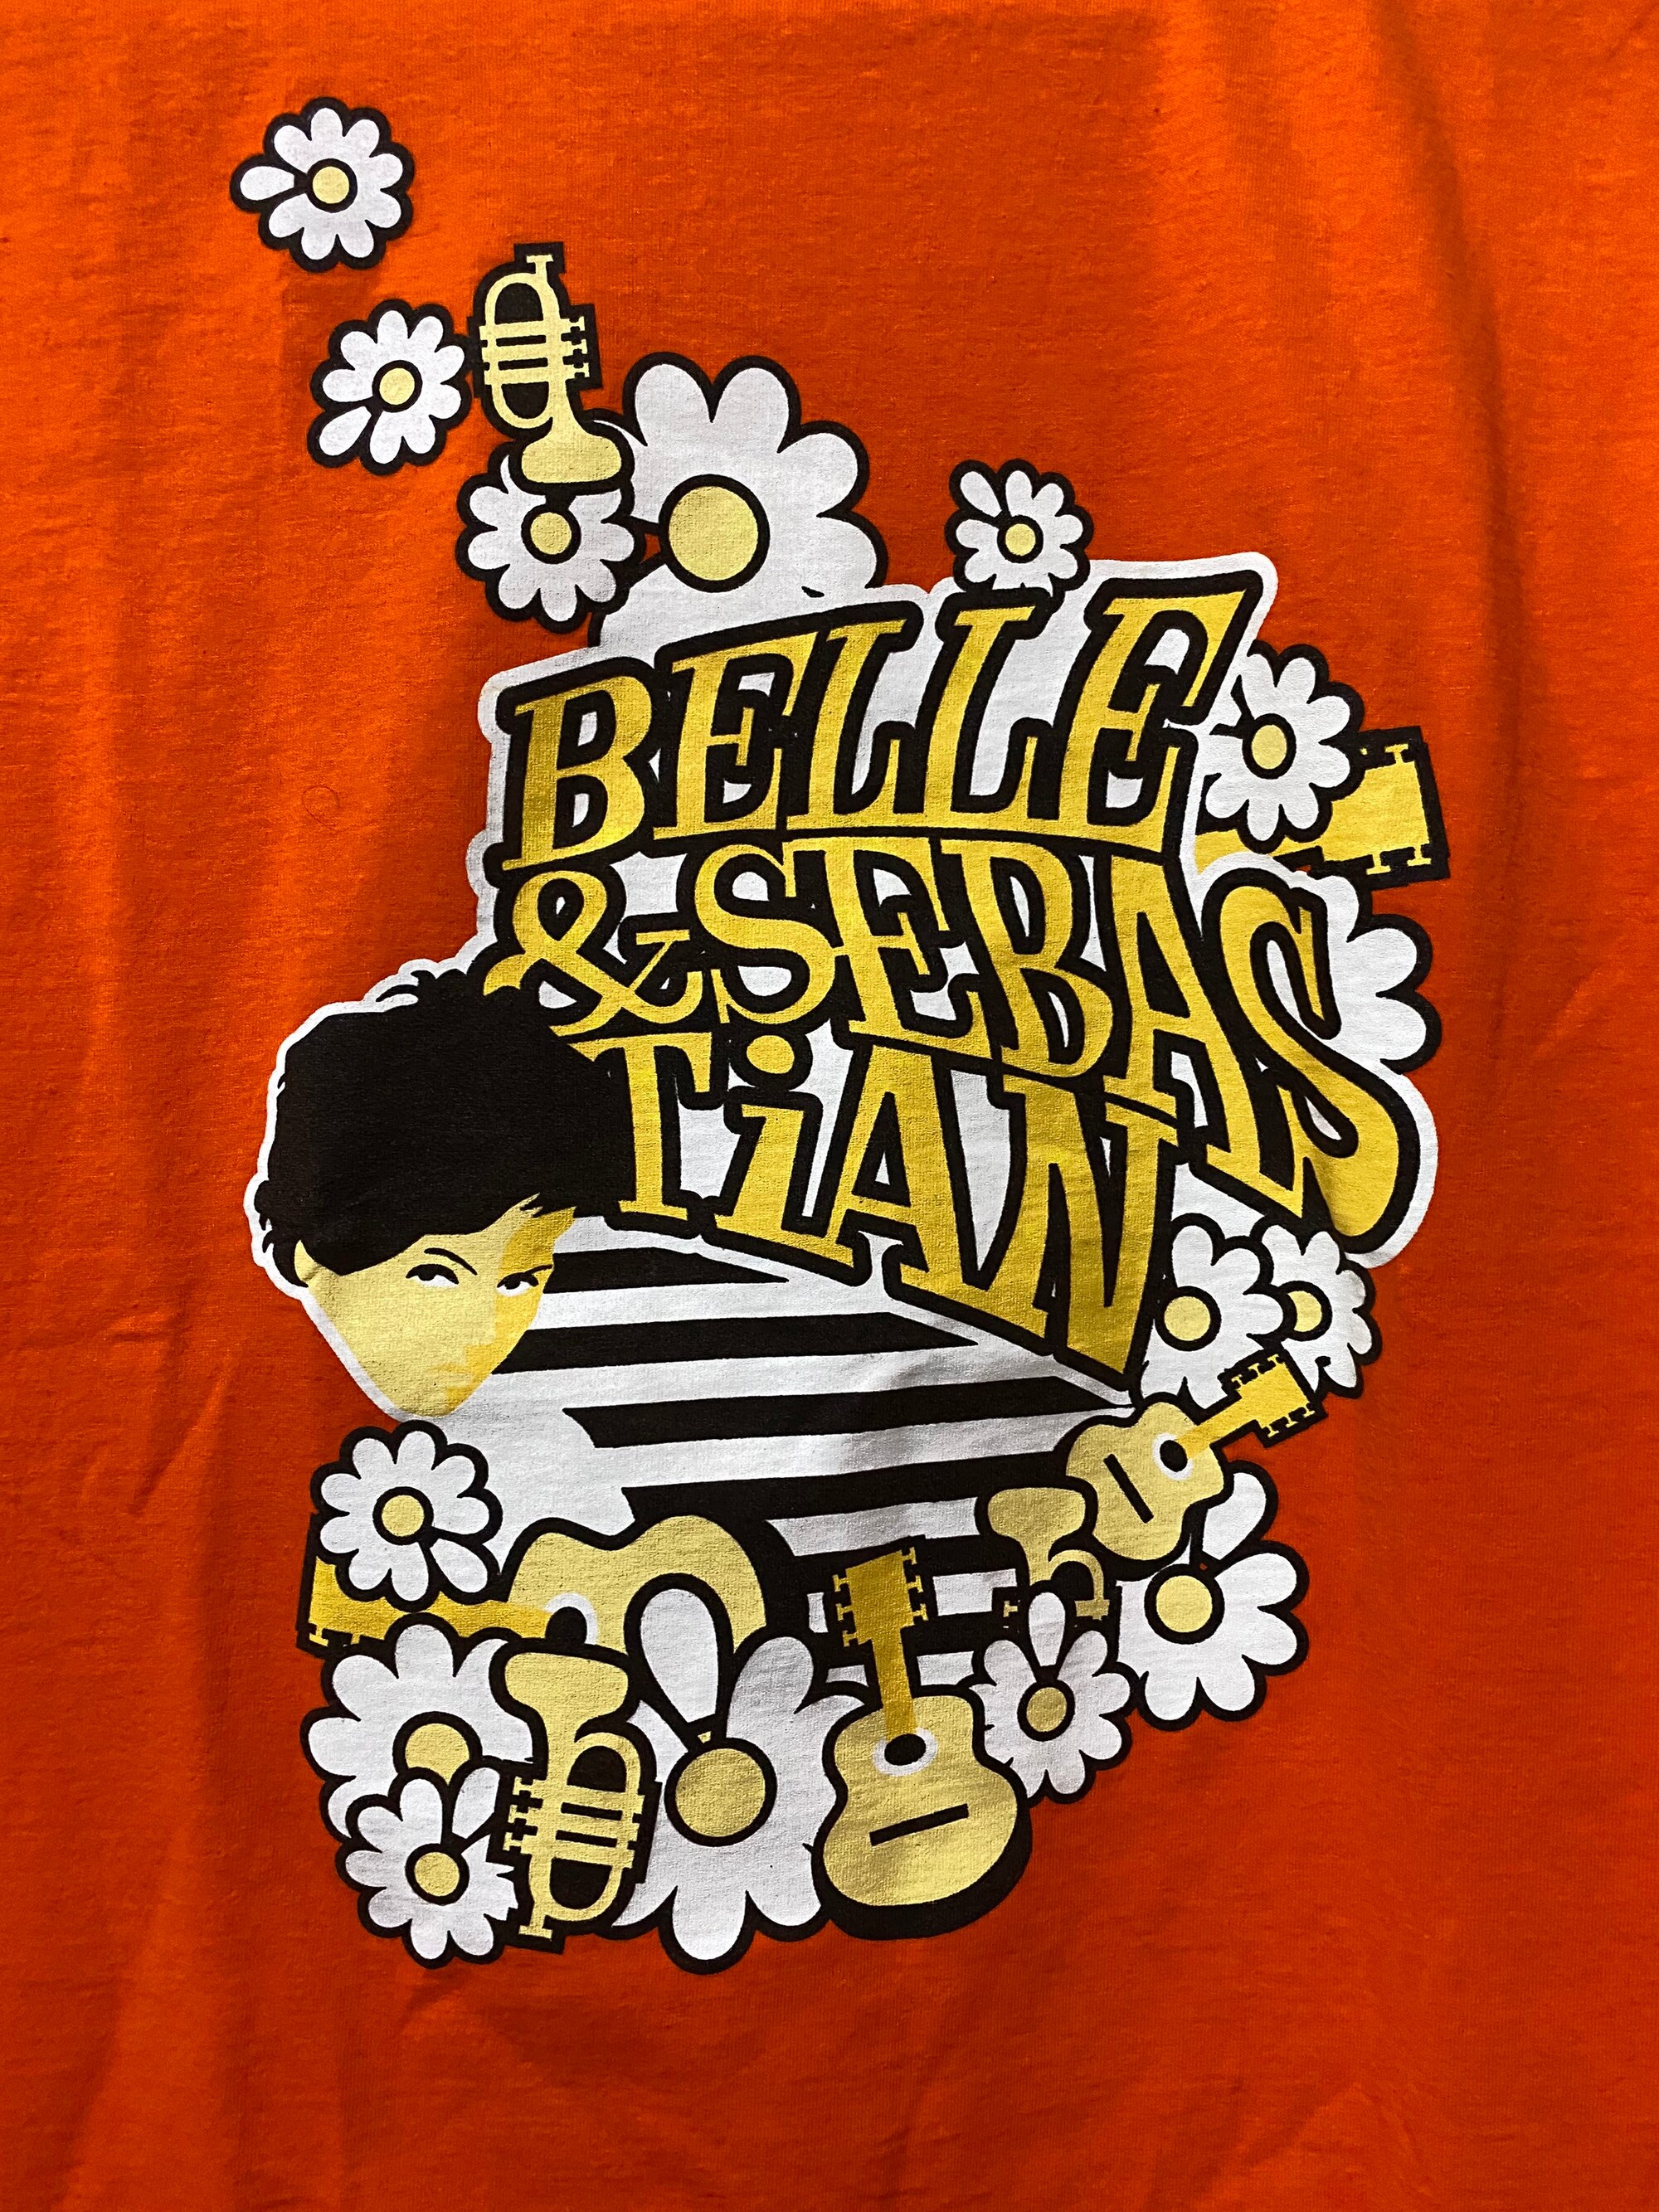 Vintage Belle & Sebastian scottish indie britpop music T-shirt orange colour